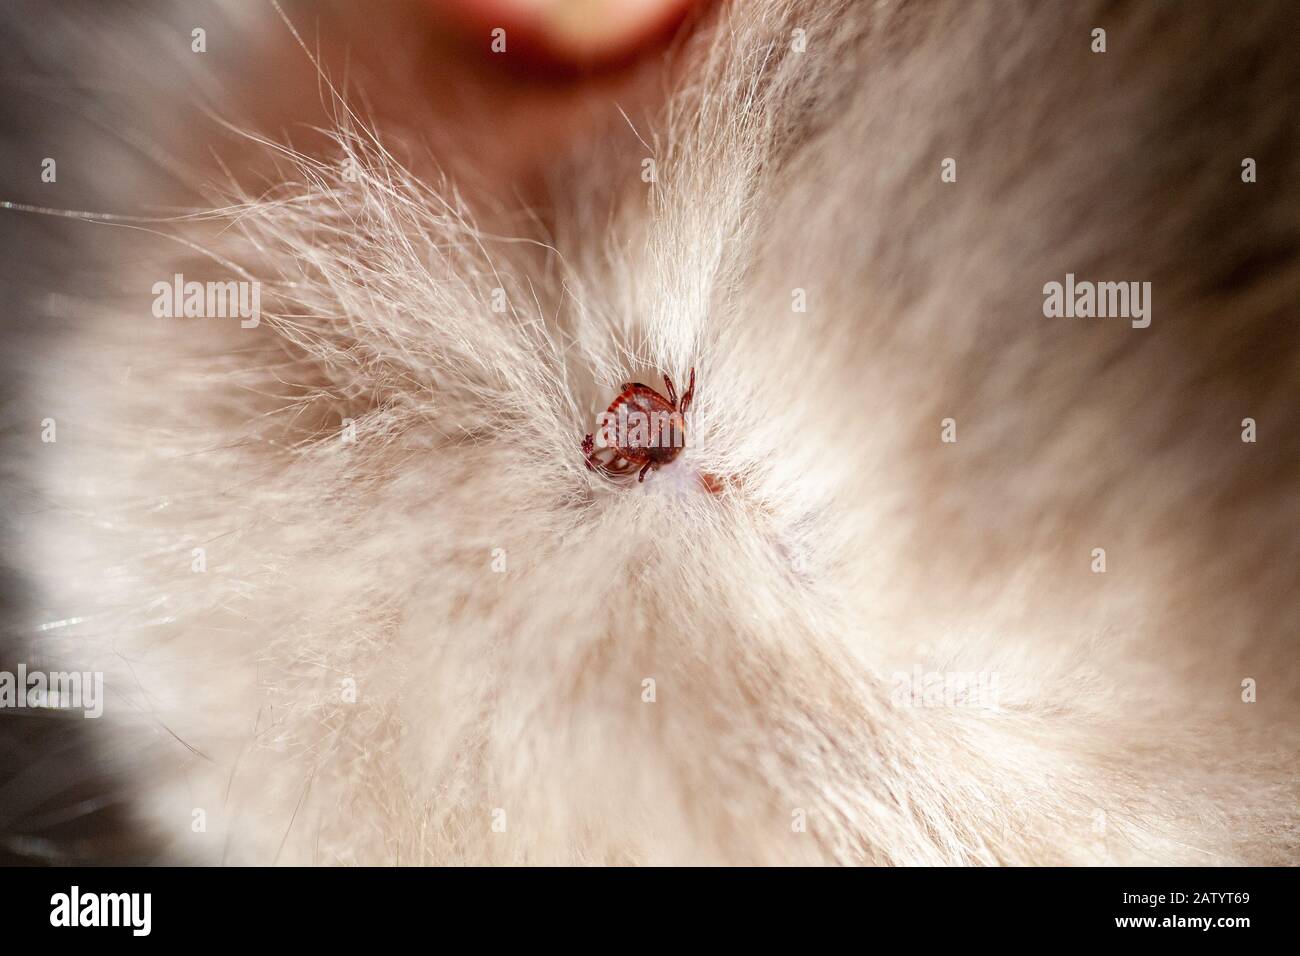 An ixodic infectious tick stuck to the head of a kitten. A tick bit a pet. Found a sucking viral tick among the dense hair of a cat. Stock Photo